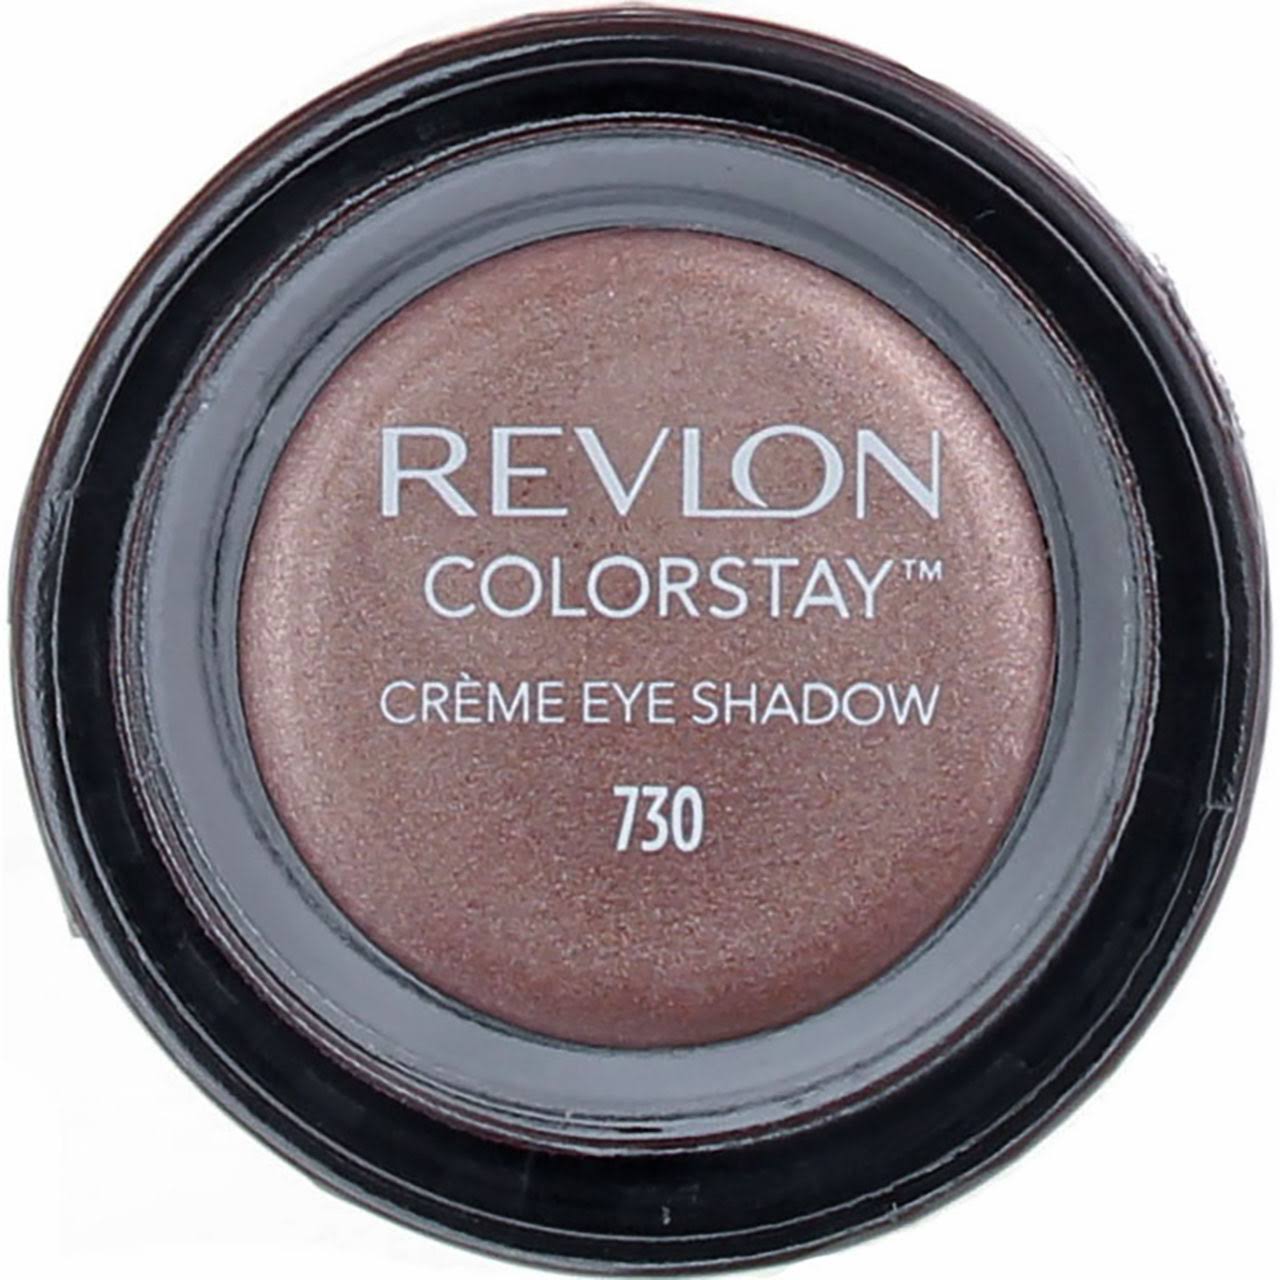 Revlon ColorStay Creme Eye Shadow - 730 Praline